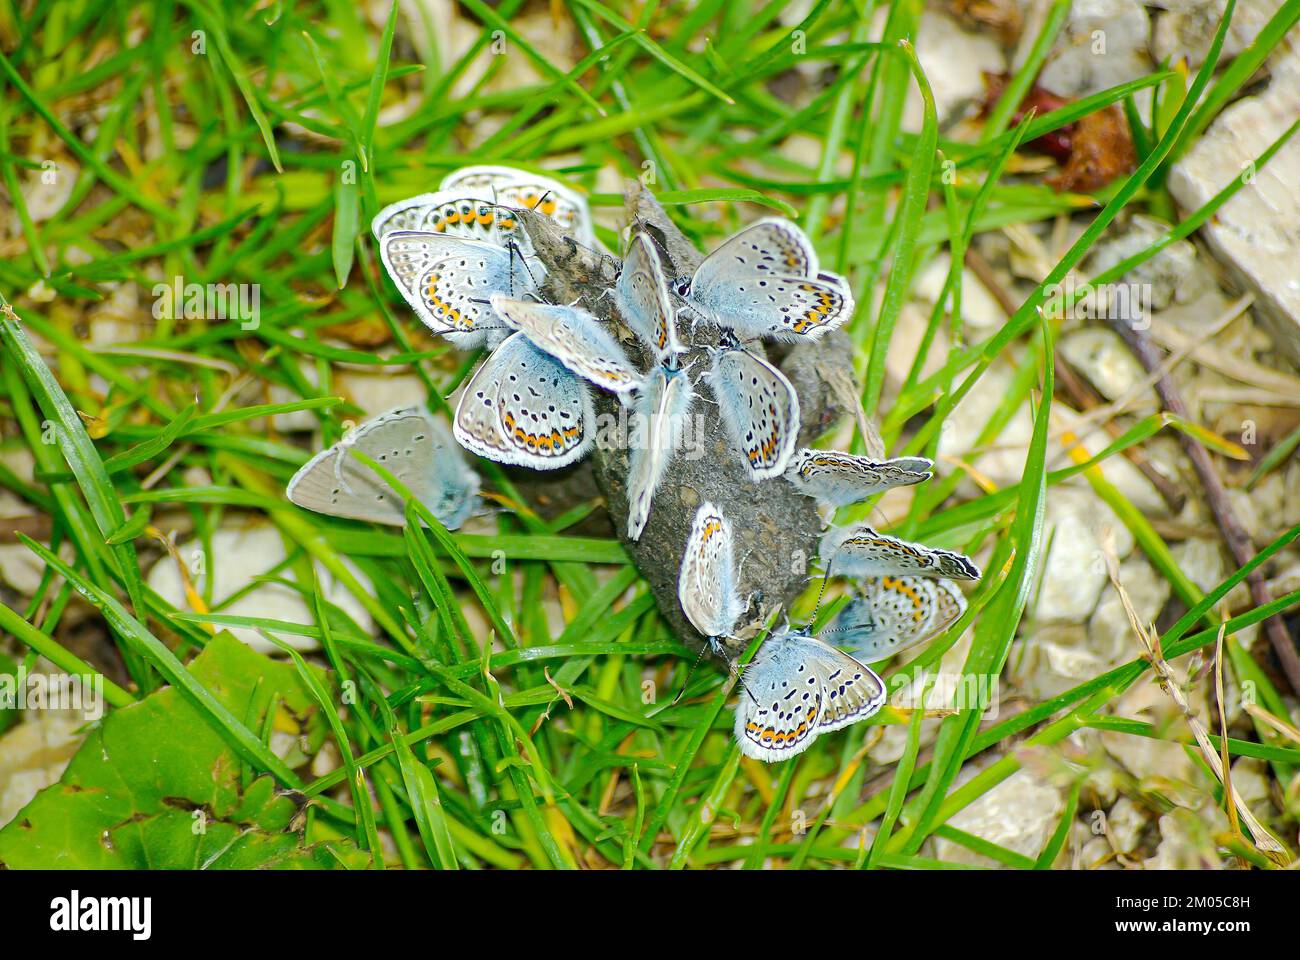 Un grupo de lycaenidae, hermosas mariposas, se reunieron para alimentarse de un montón de excrementos. Foto de stock